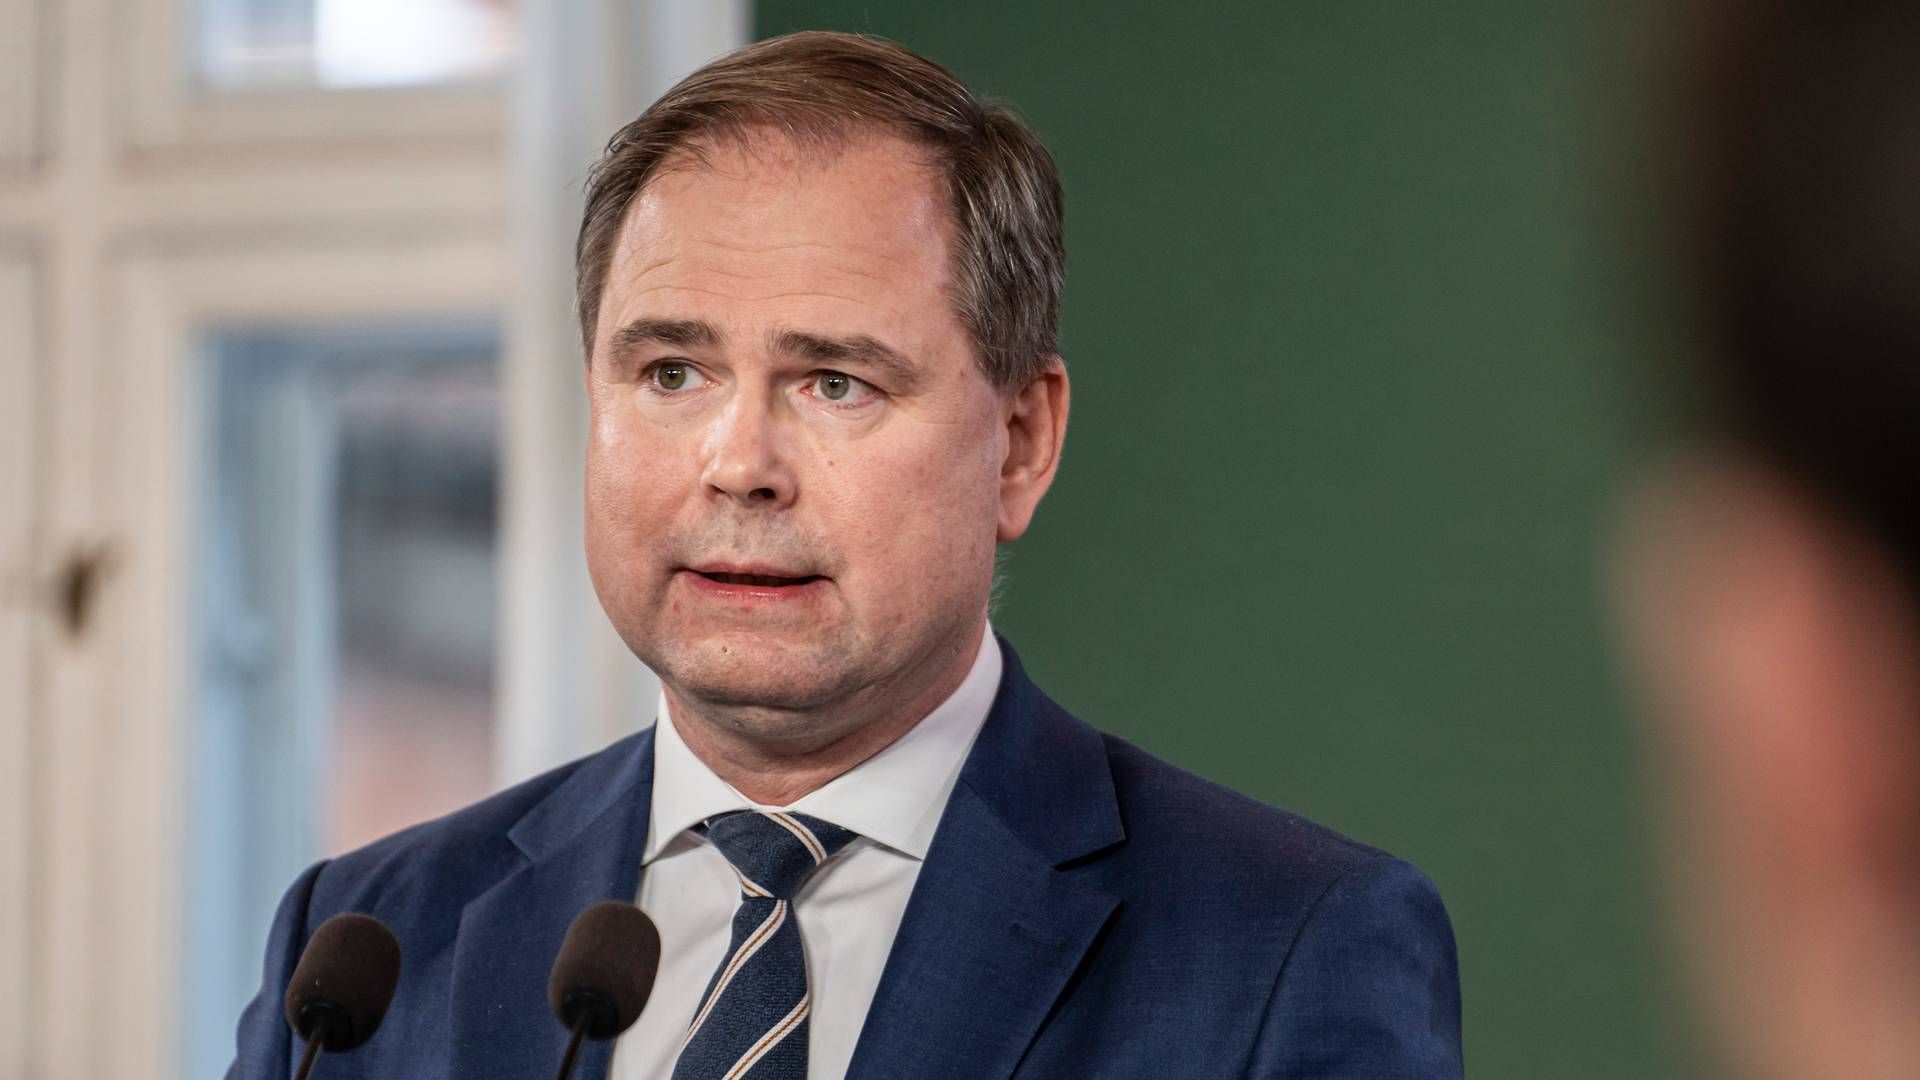 Finansminister Nicolai Wammen (S) præsenterer regeringens 2030-plan. | Foto: Emil Nicolai Helms